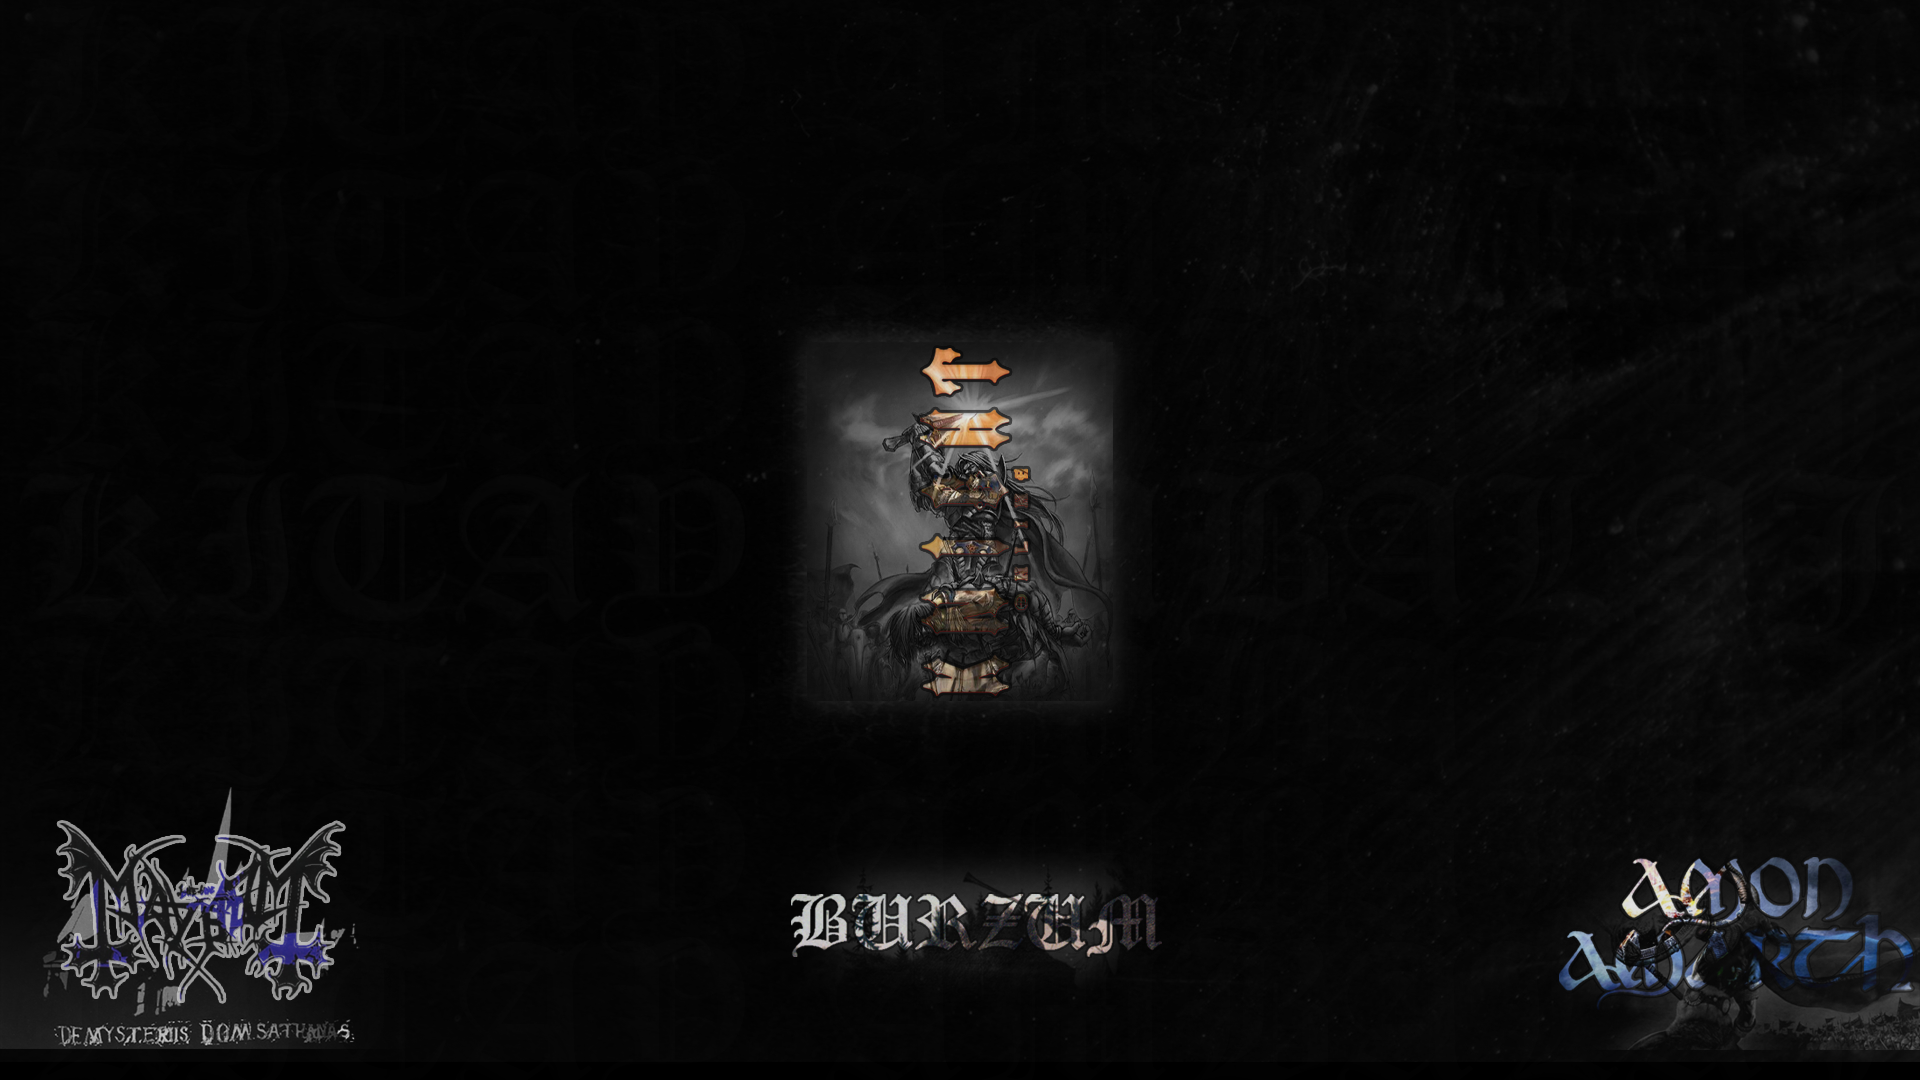 Mayhem Burzum Amon Amarth Knight Online Black Metal Gothic Minimalism Drawing Dirty 1920x1080